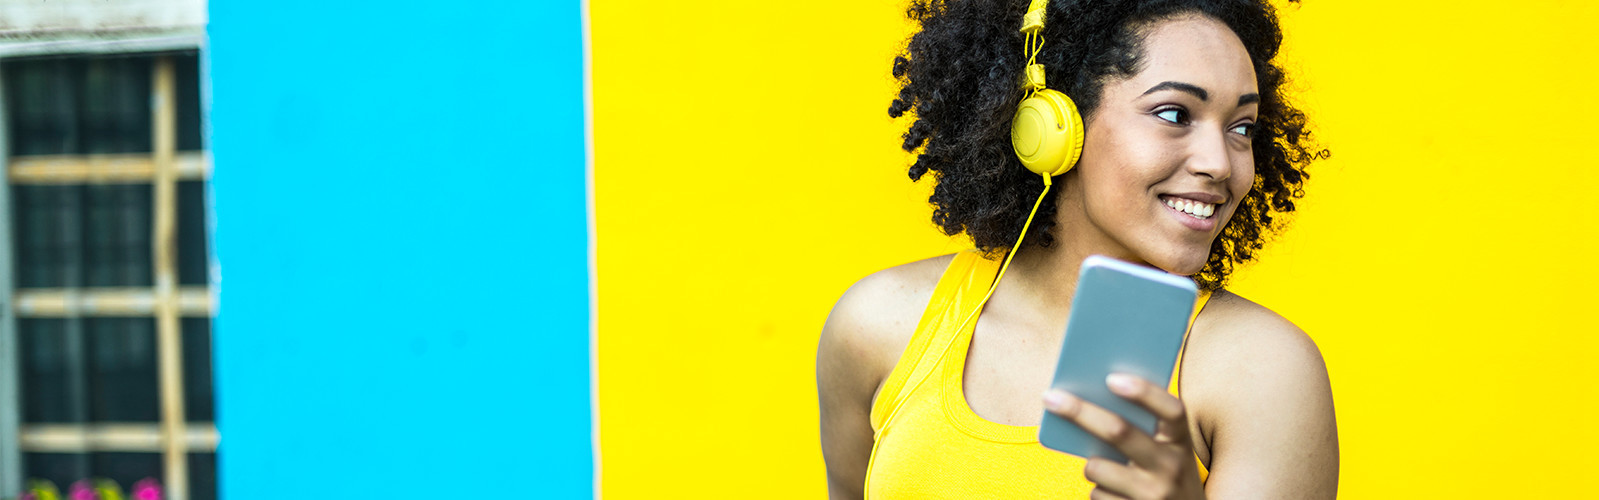 Woman smiling looking sideways while listening to something on headphones